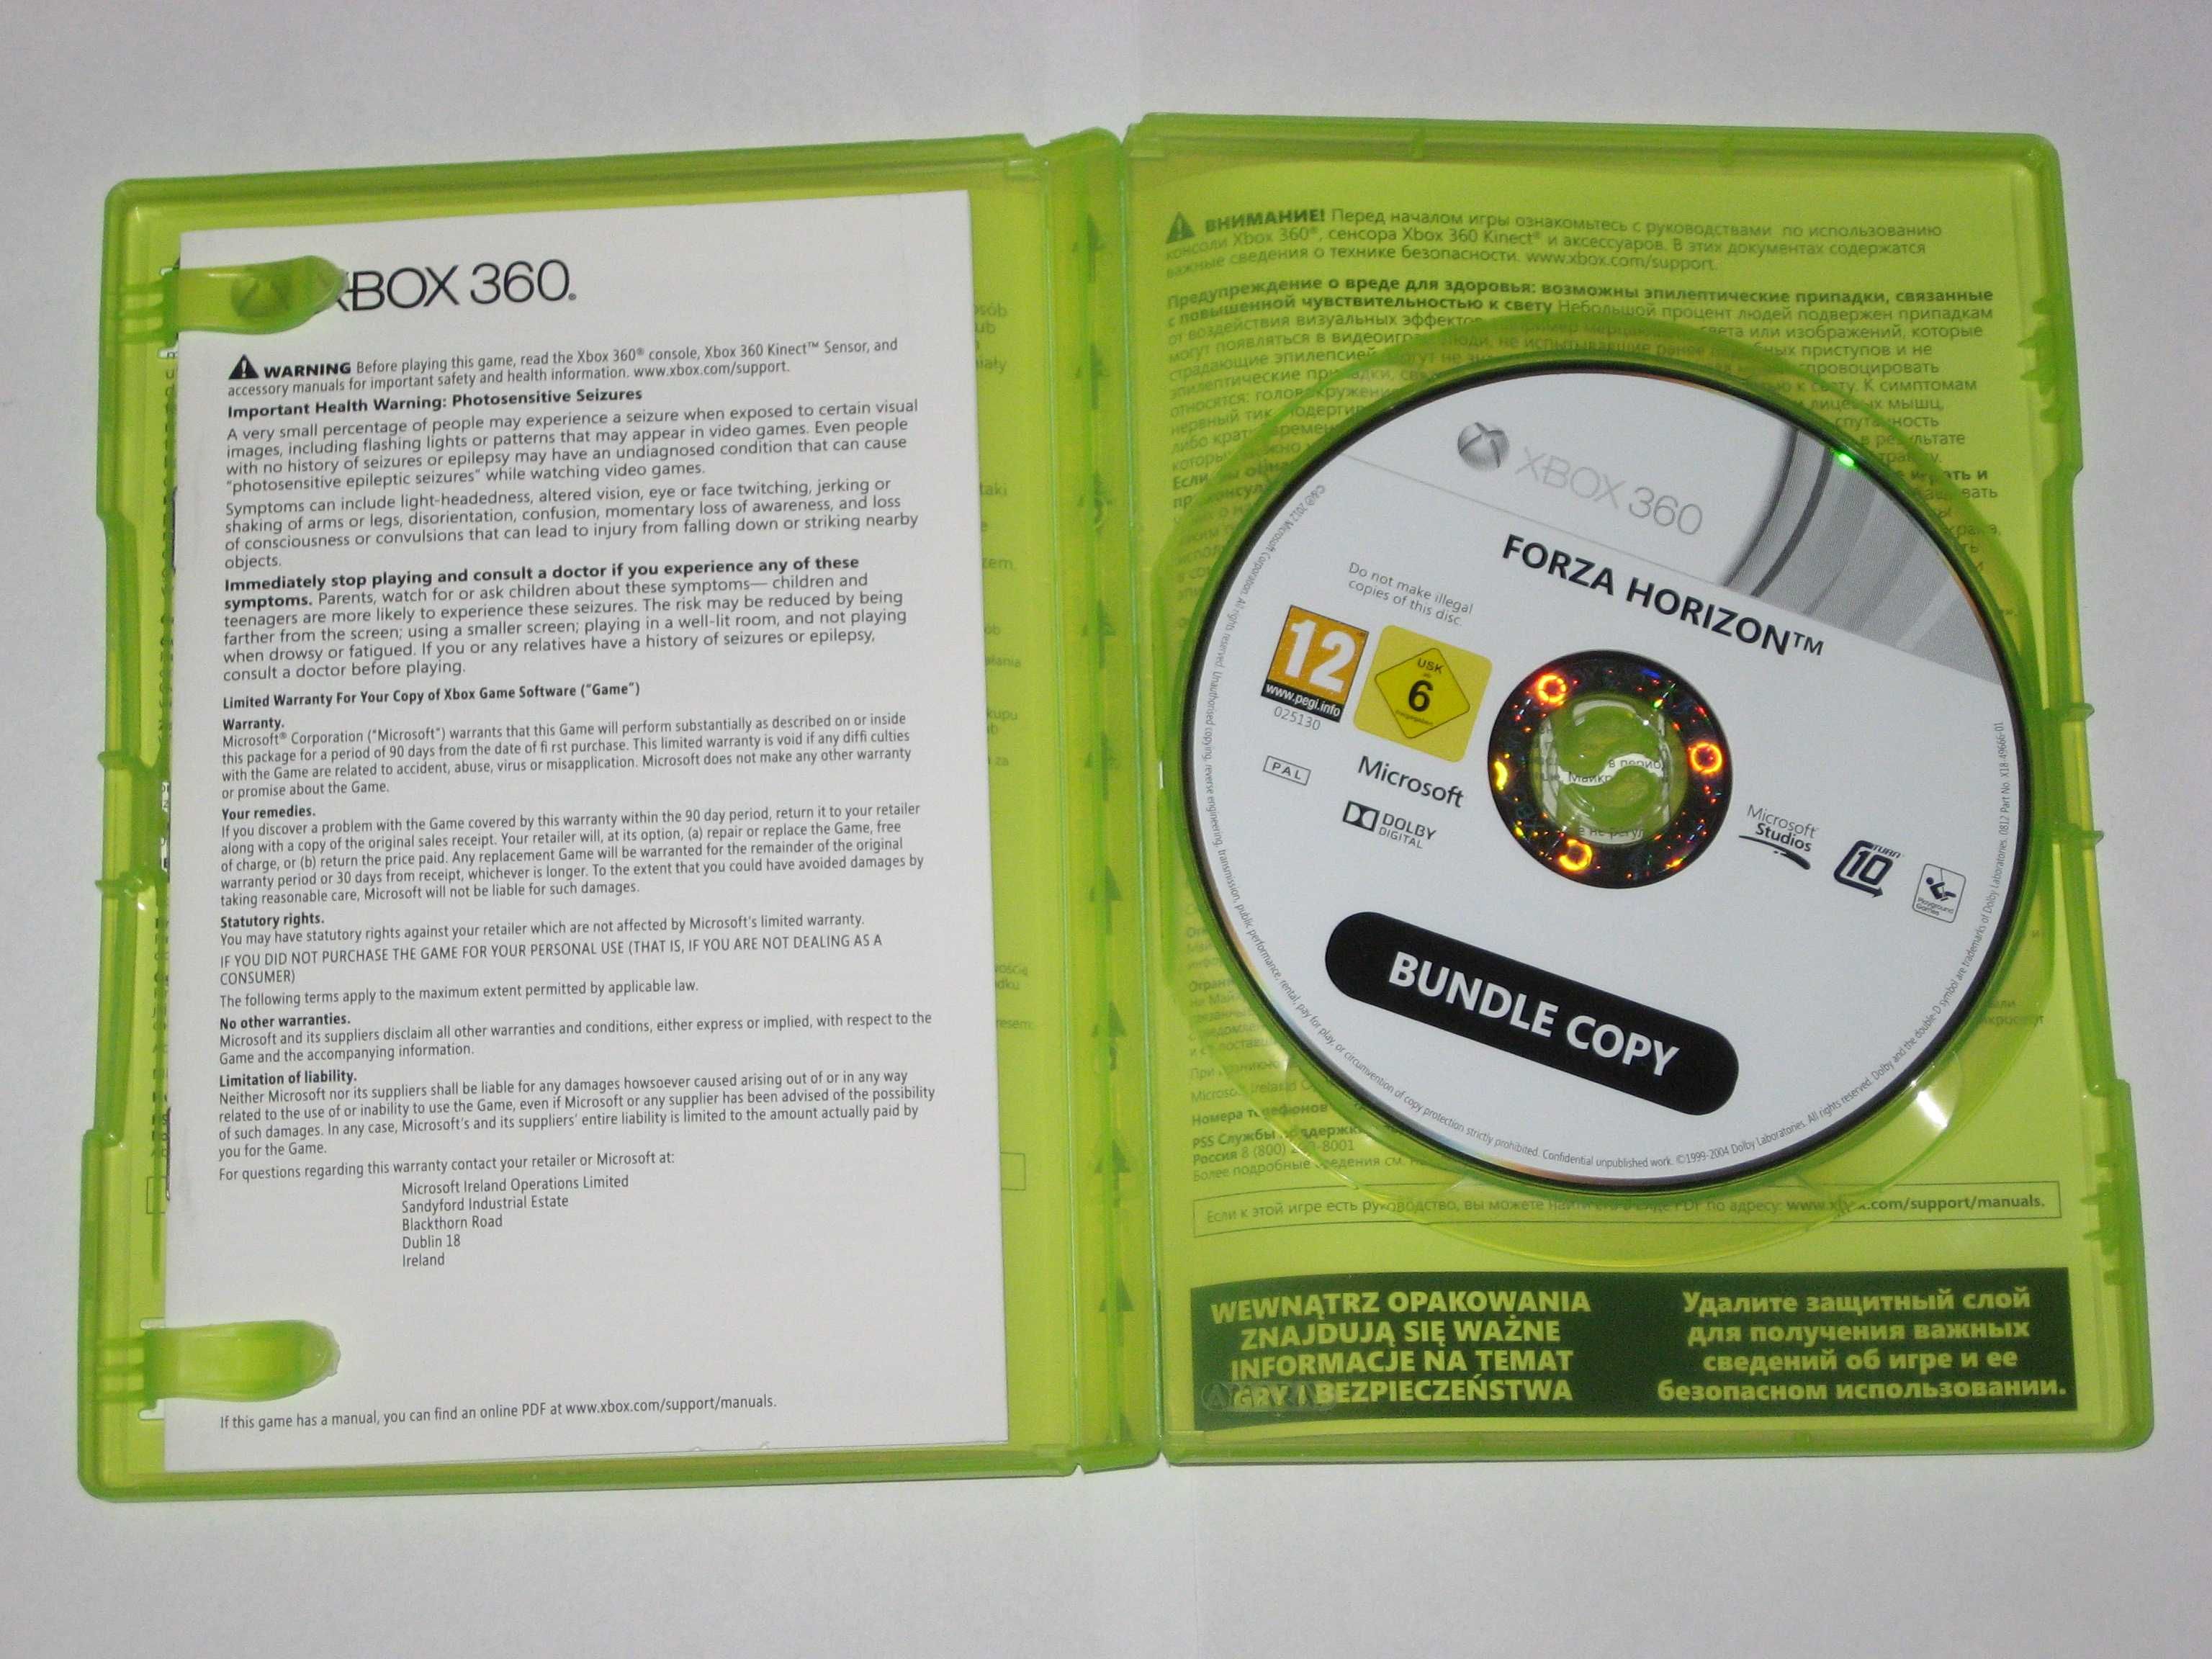 Forza Horizon bdb! Xbox360! Bundle Copy! po polsku!!! bdb!